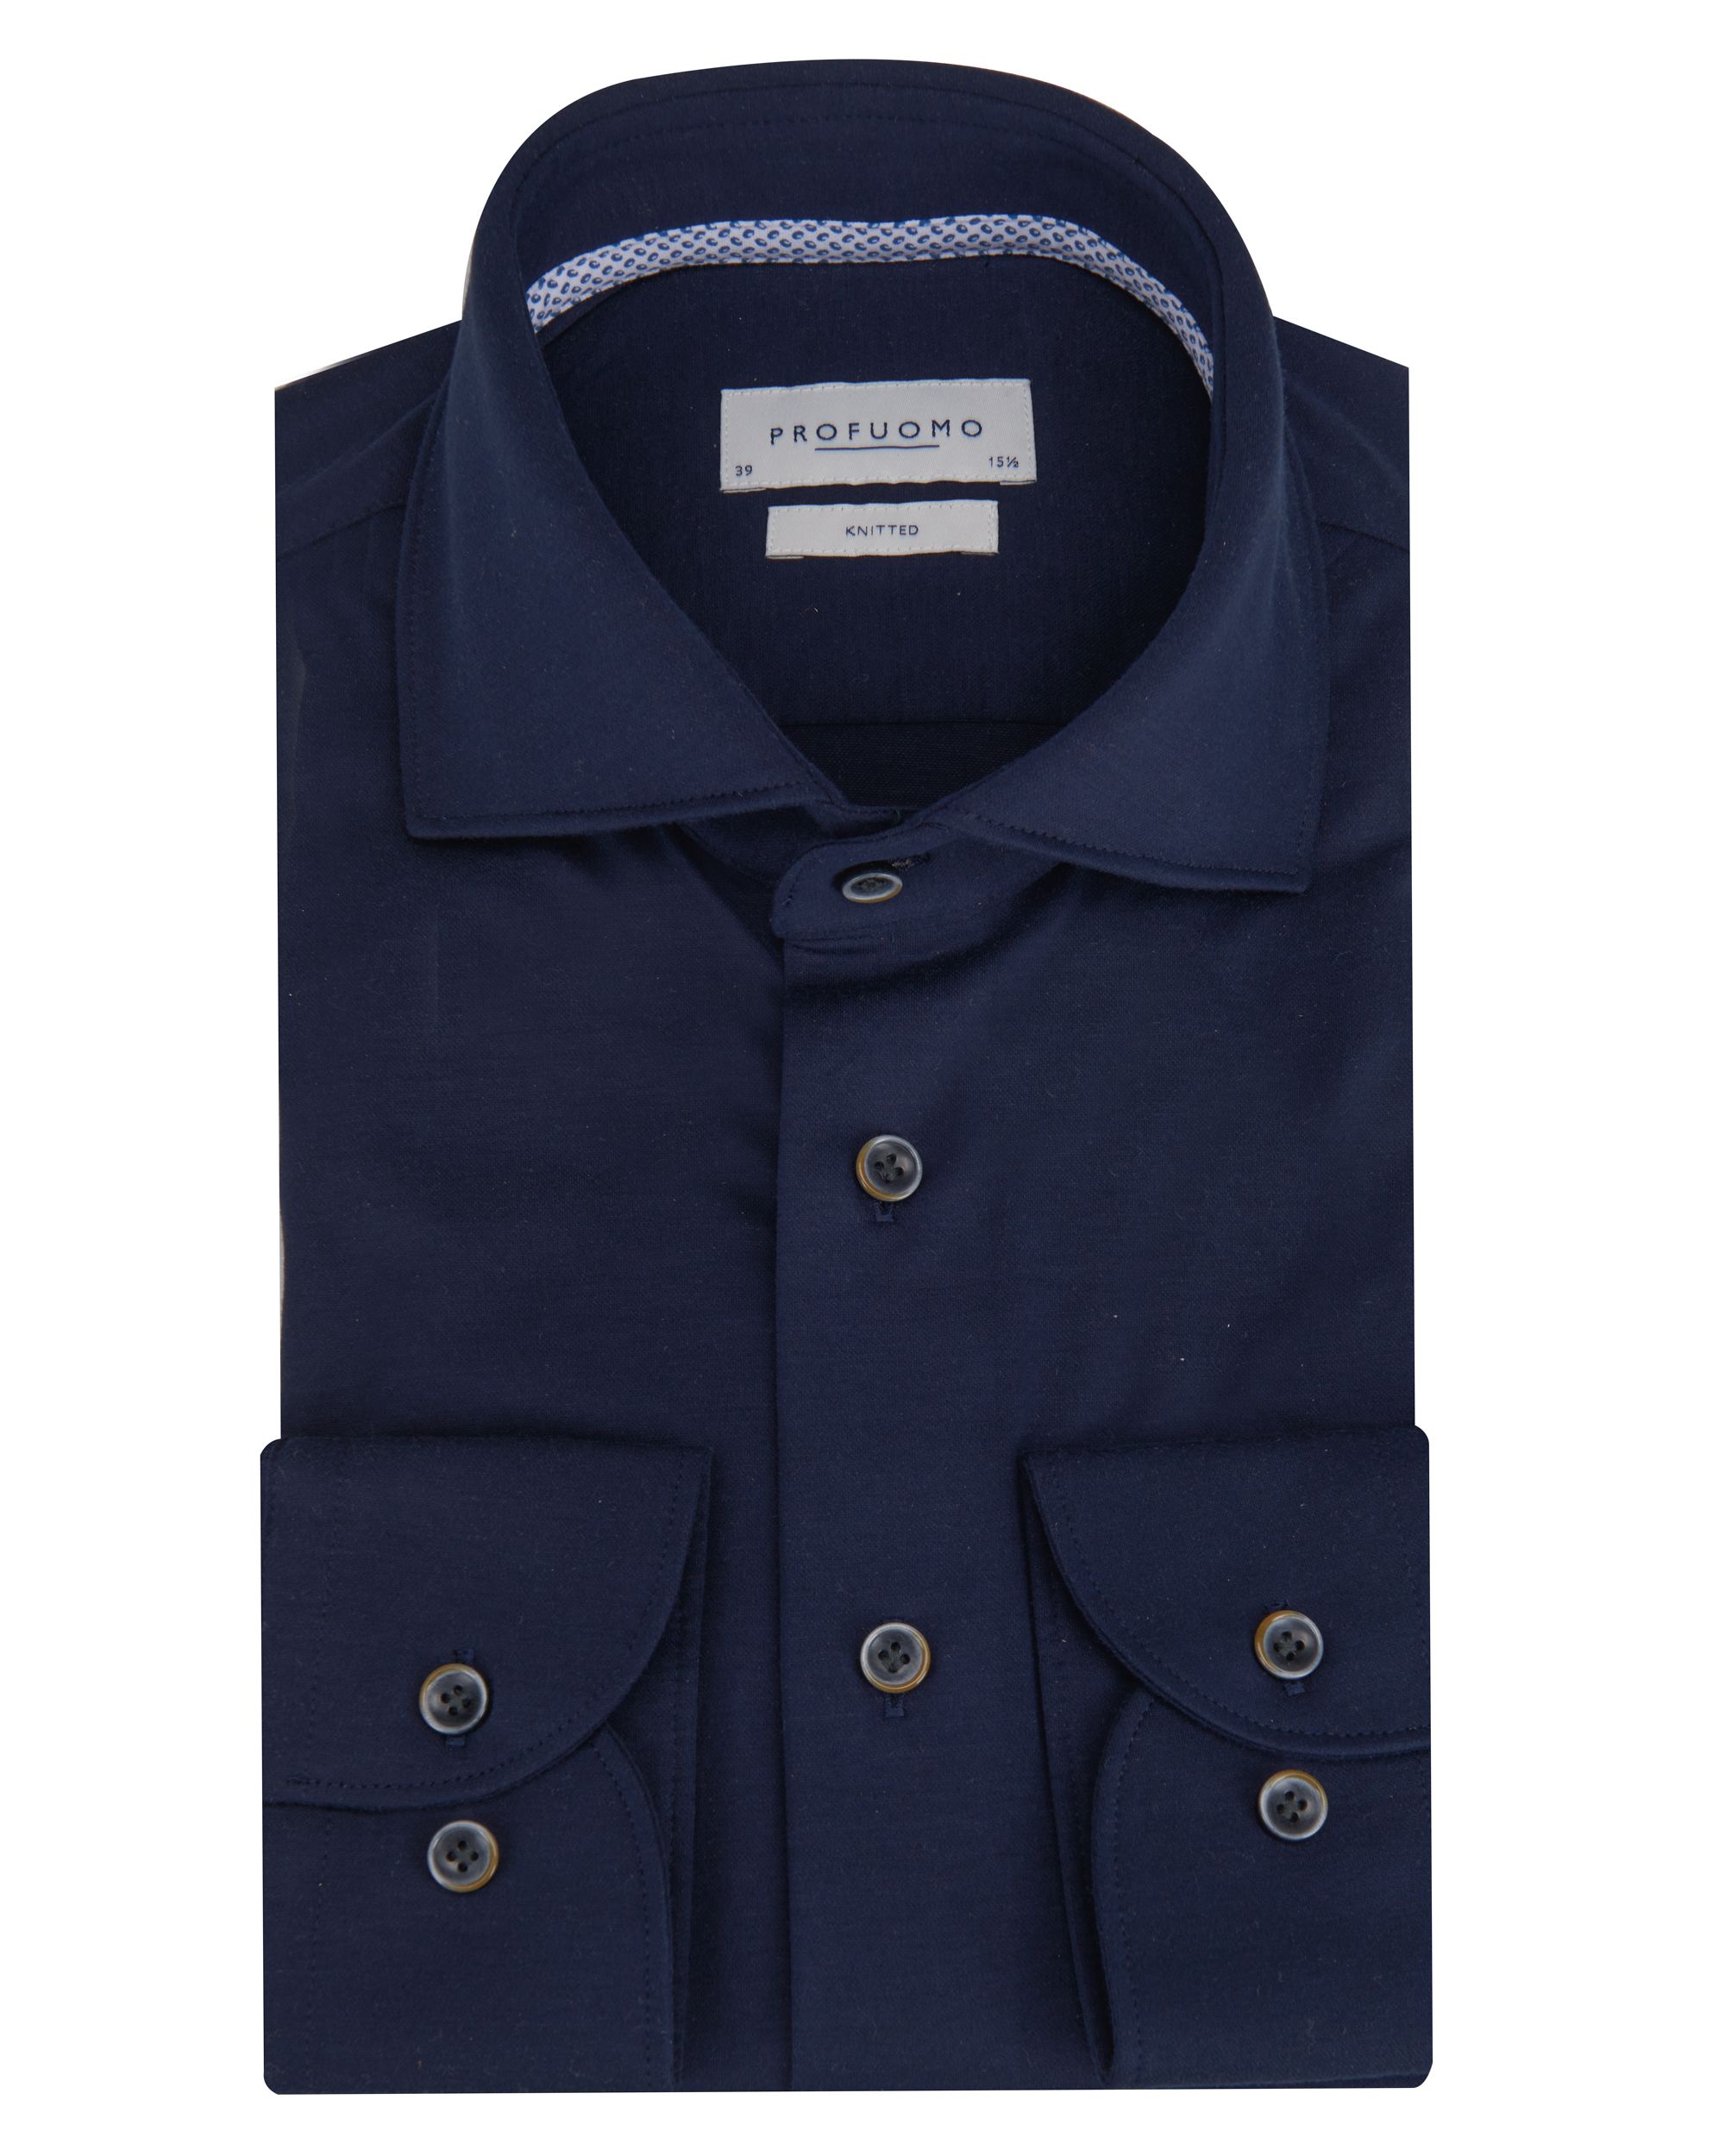 Profuomo Originale Knitted Overhemd LM Blauw 090407-001-38